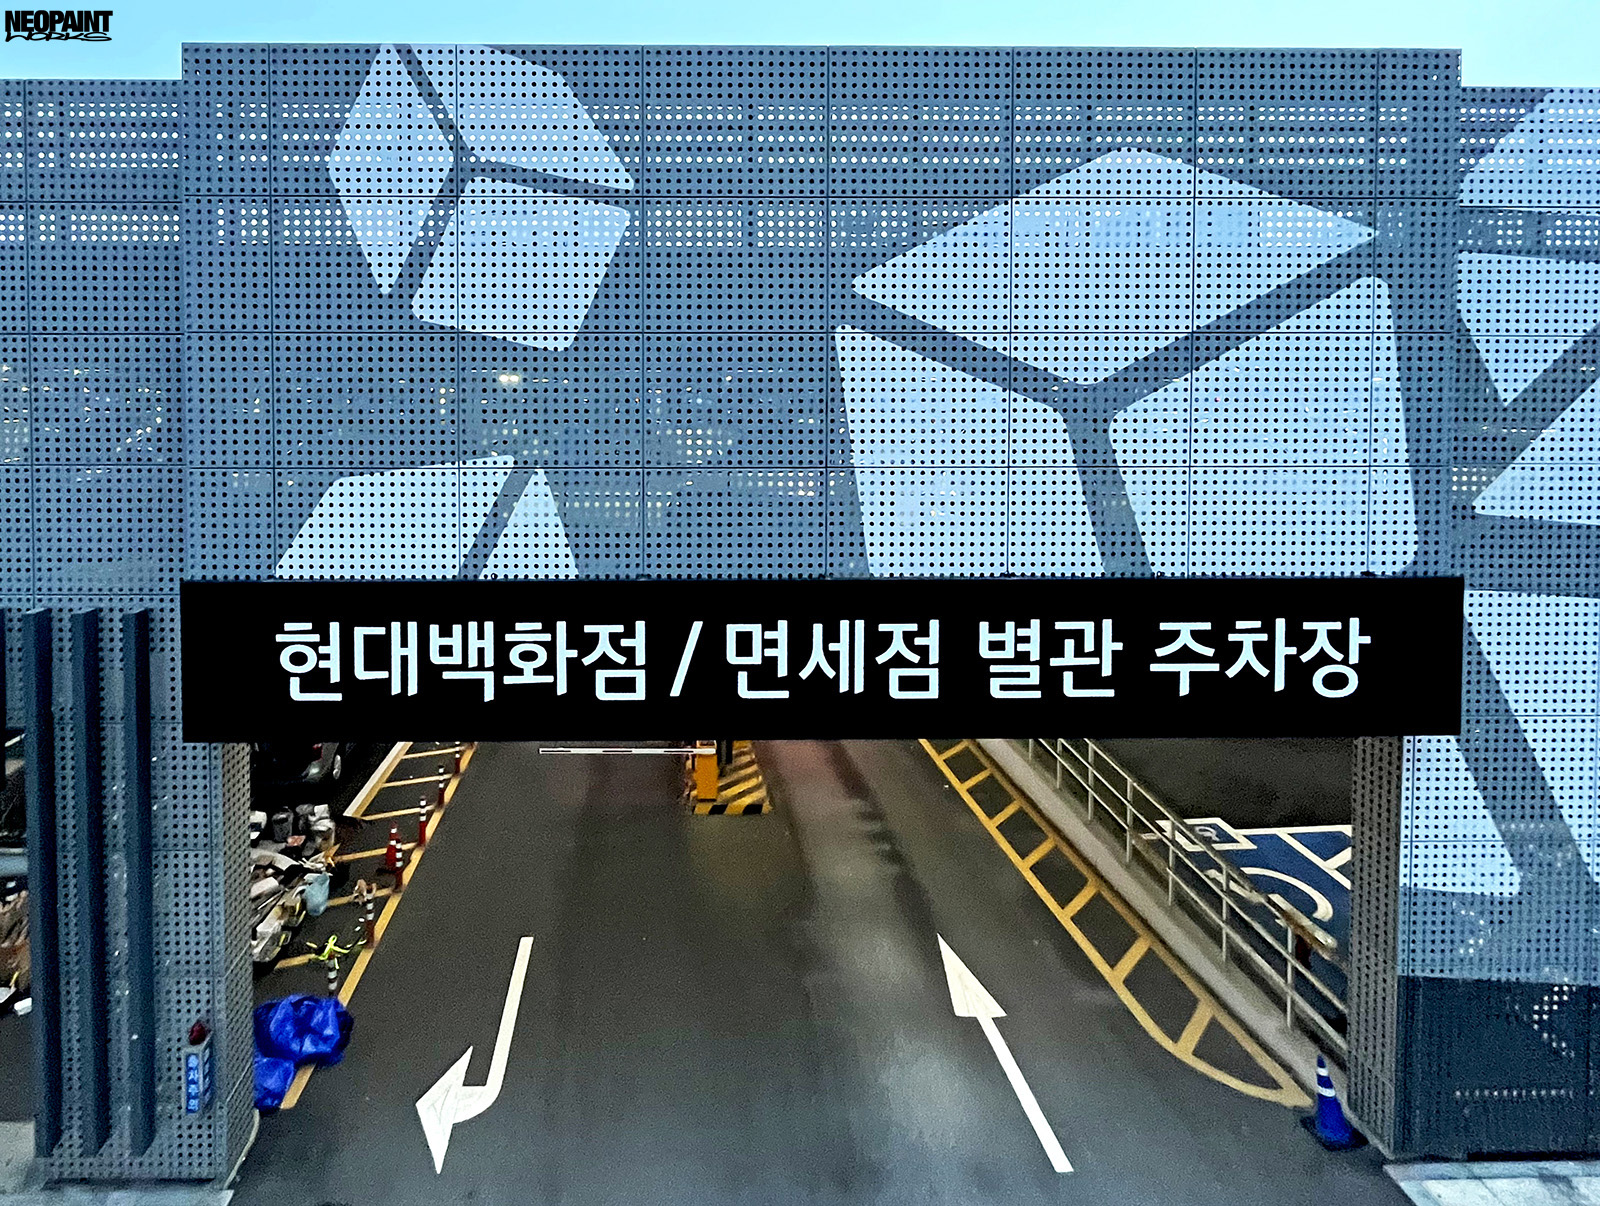 Rubik-kocka festmény - Neopaint Works - Korea (109)